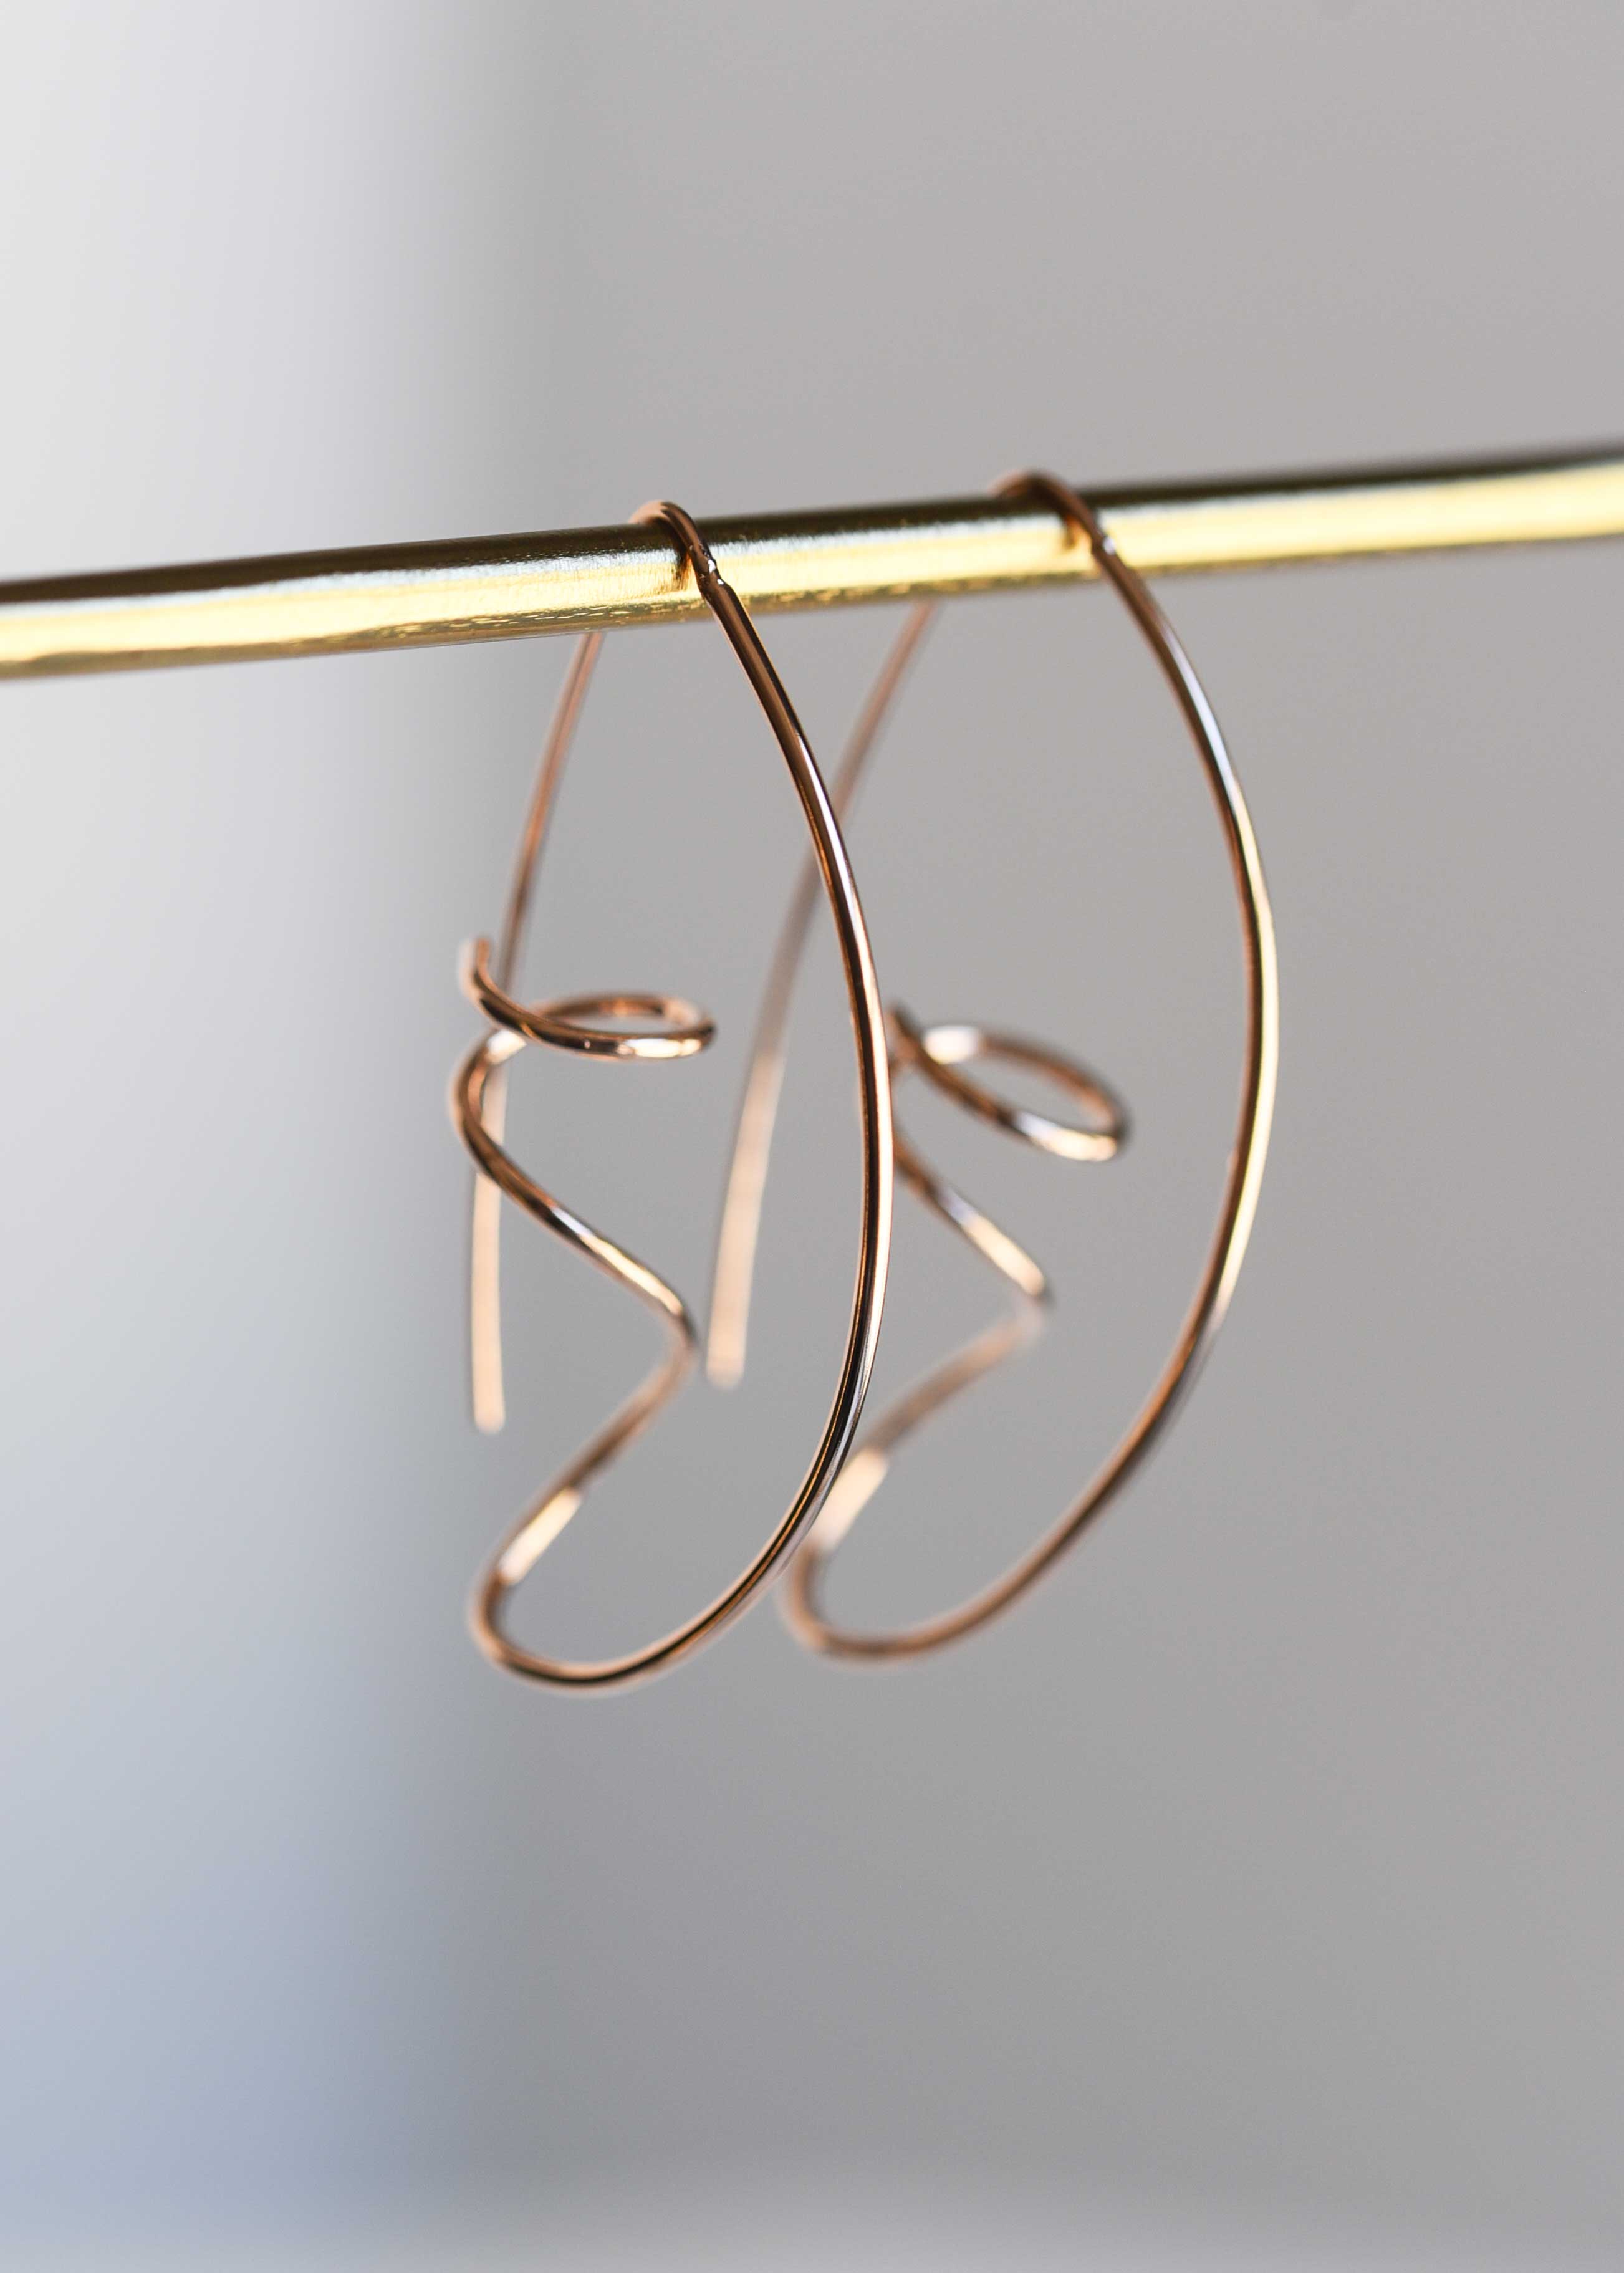 Geometric Rose Gold Earrings large hoops modern